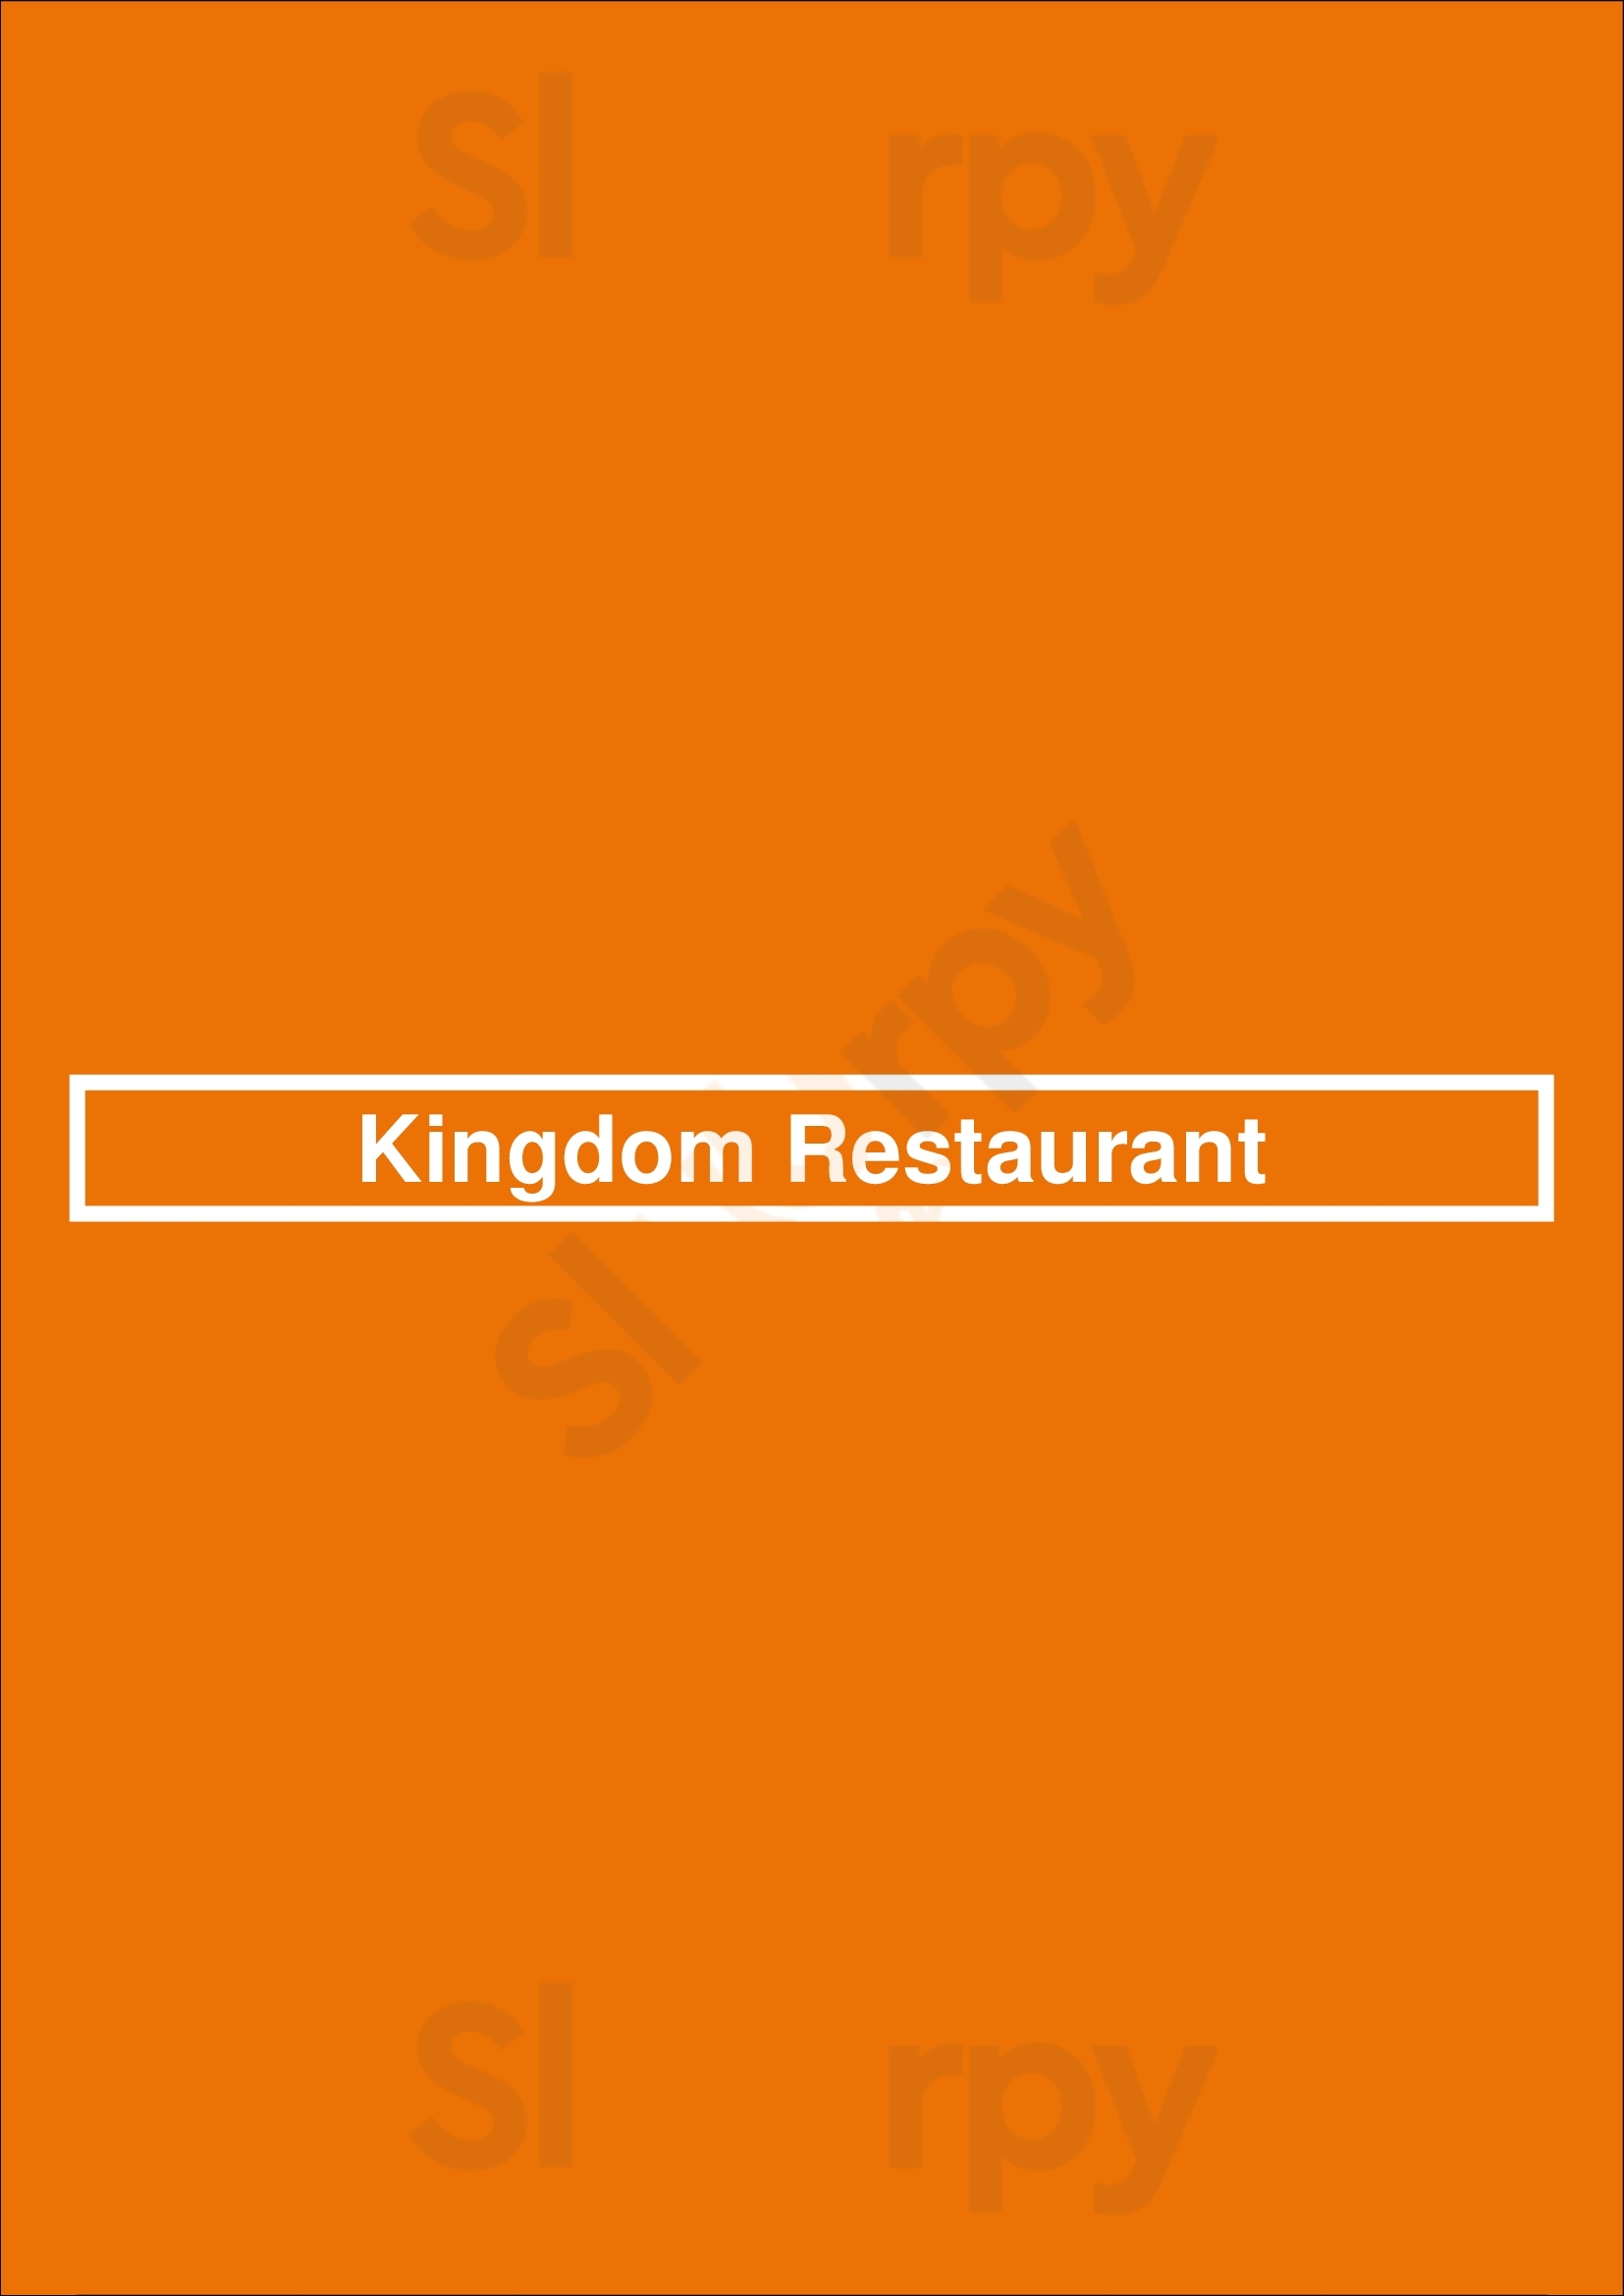 Kingdom Restaurant Madison Menu - 1